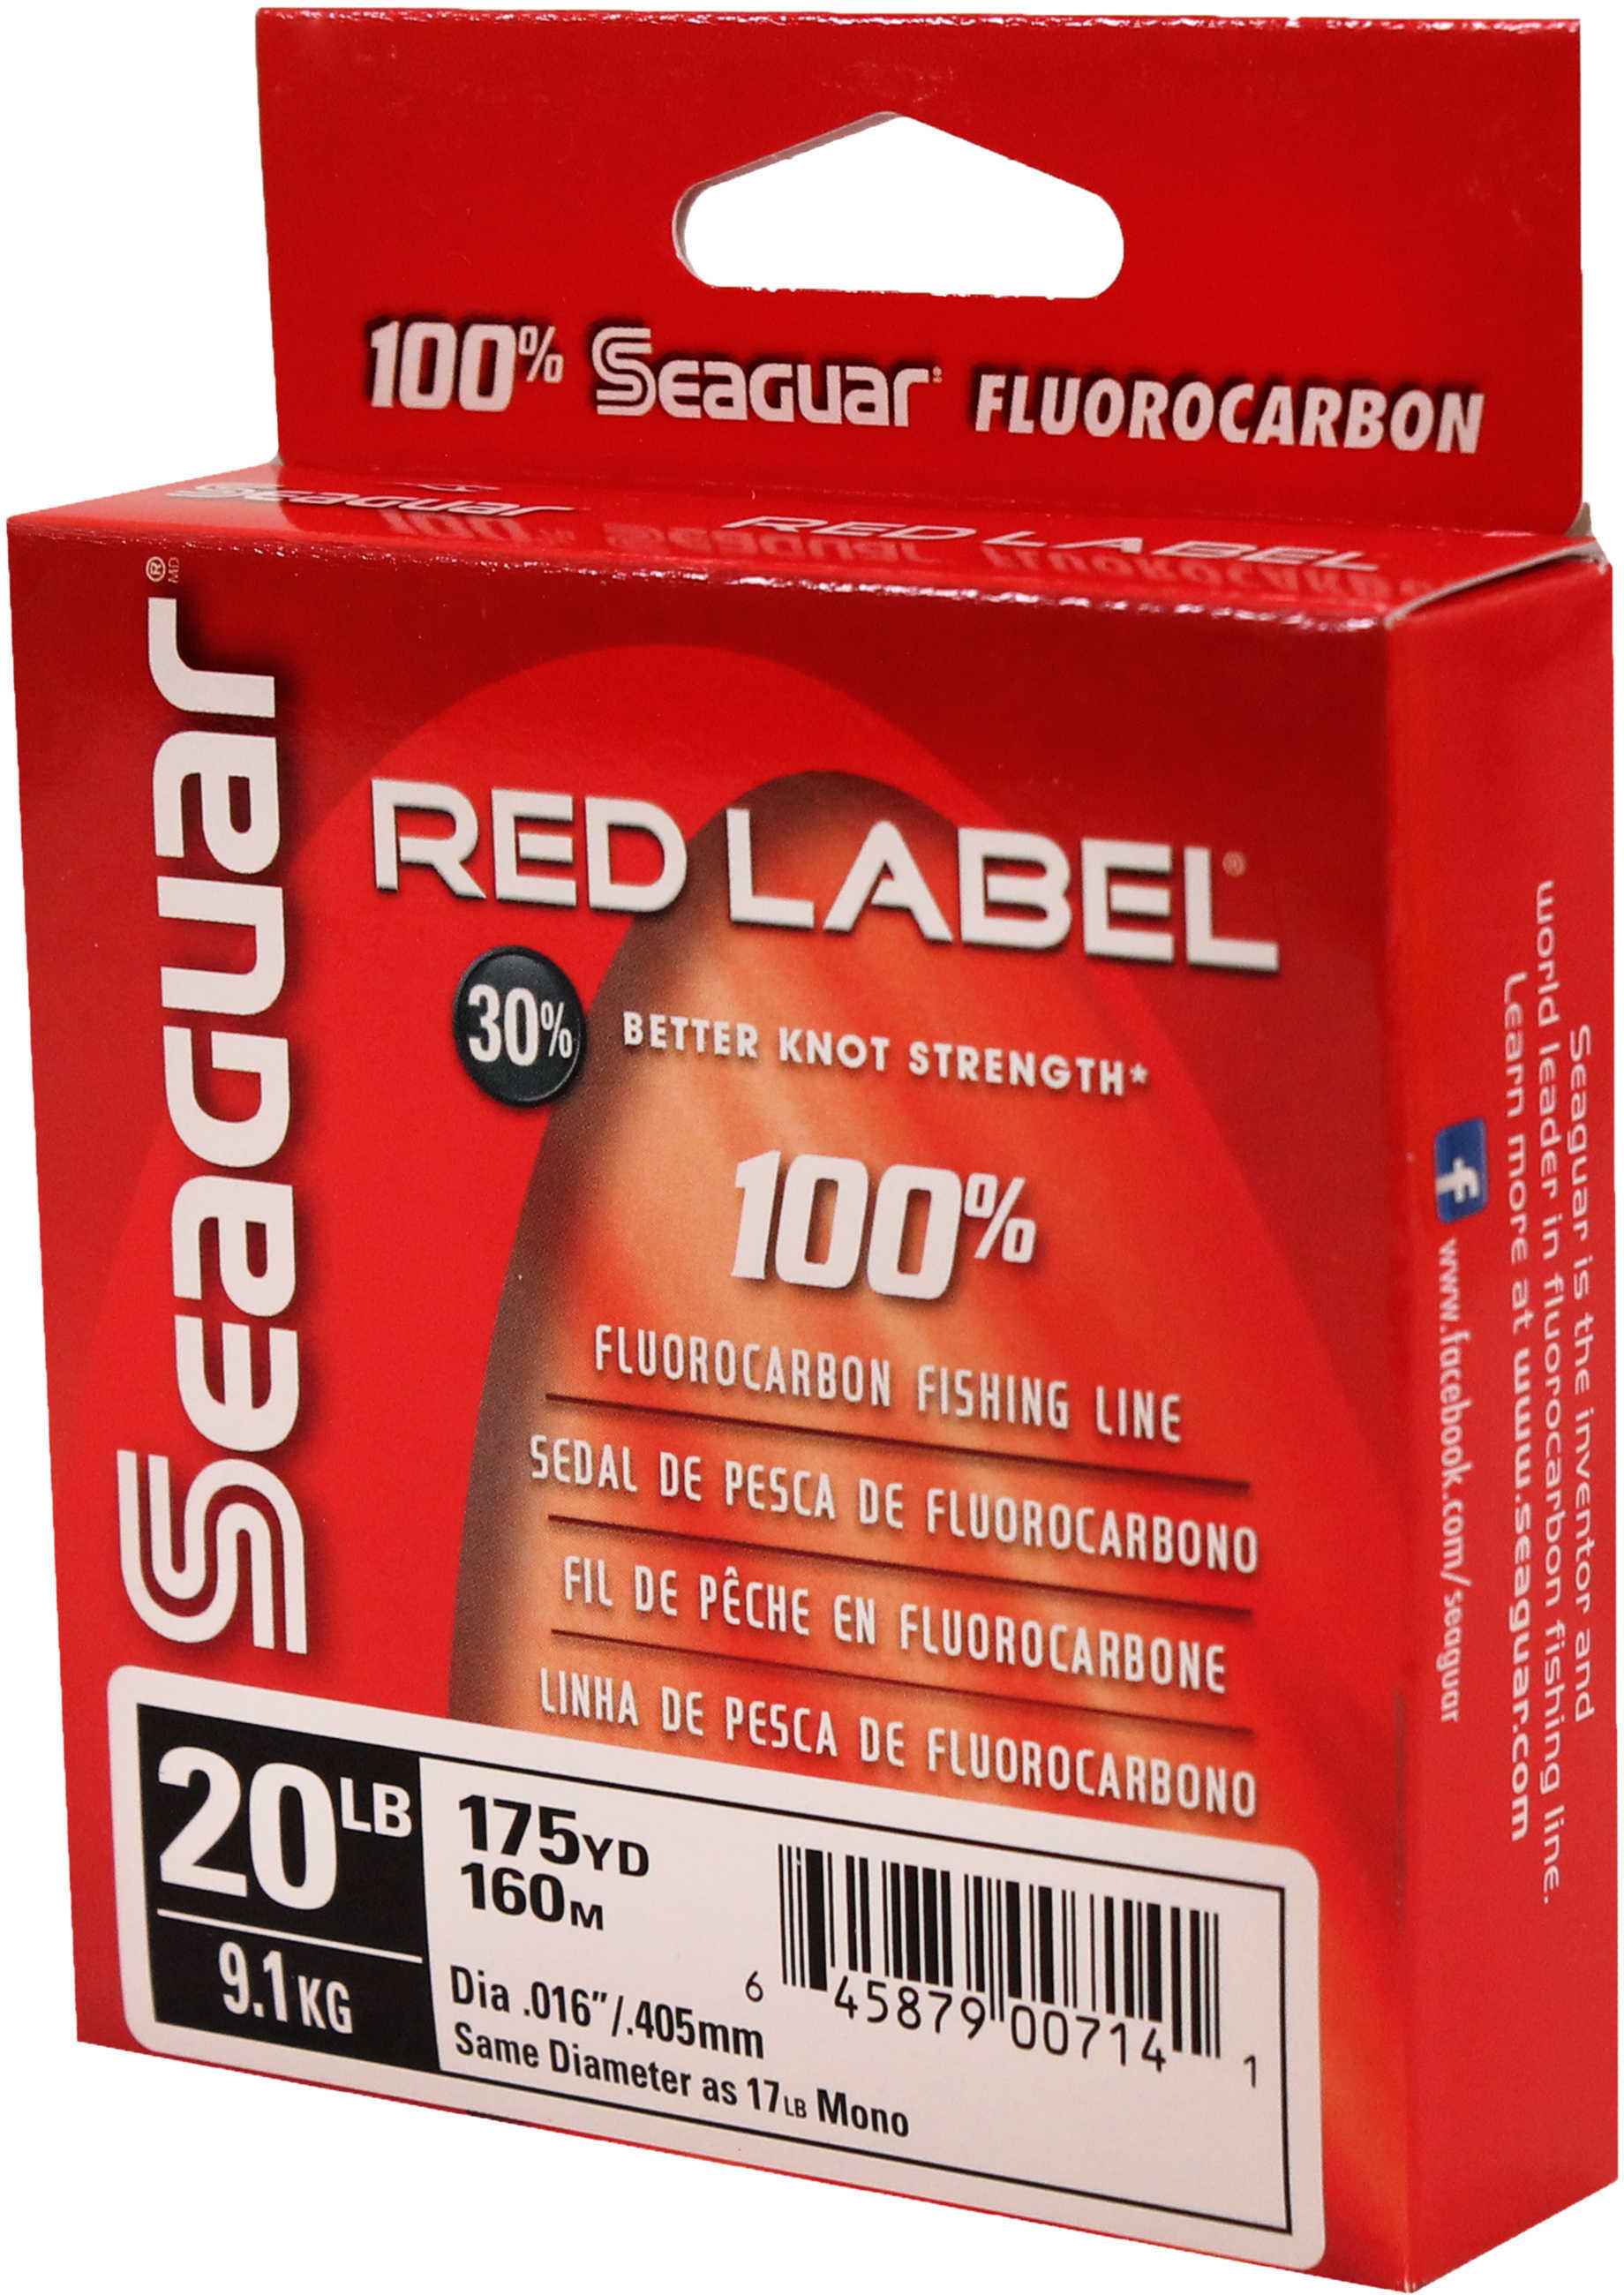 Seaguar Red Label Fluorcarbon Clear 175yds 20Lb Md#: 20Rm-175